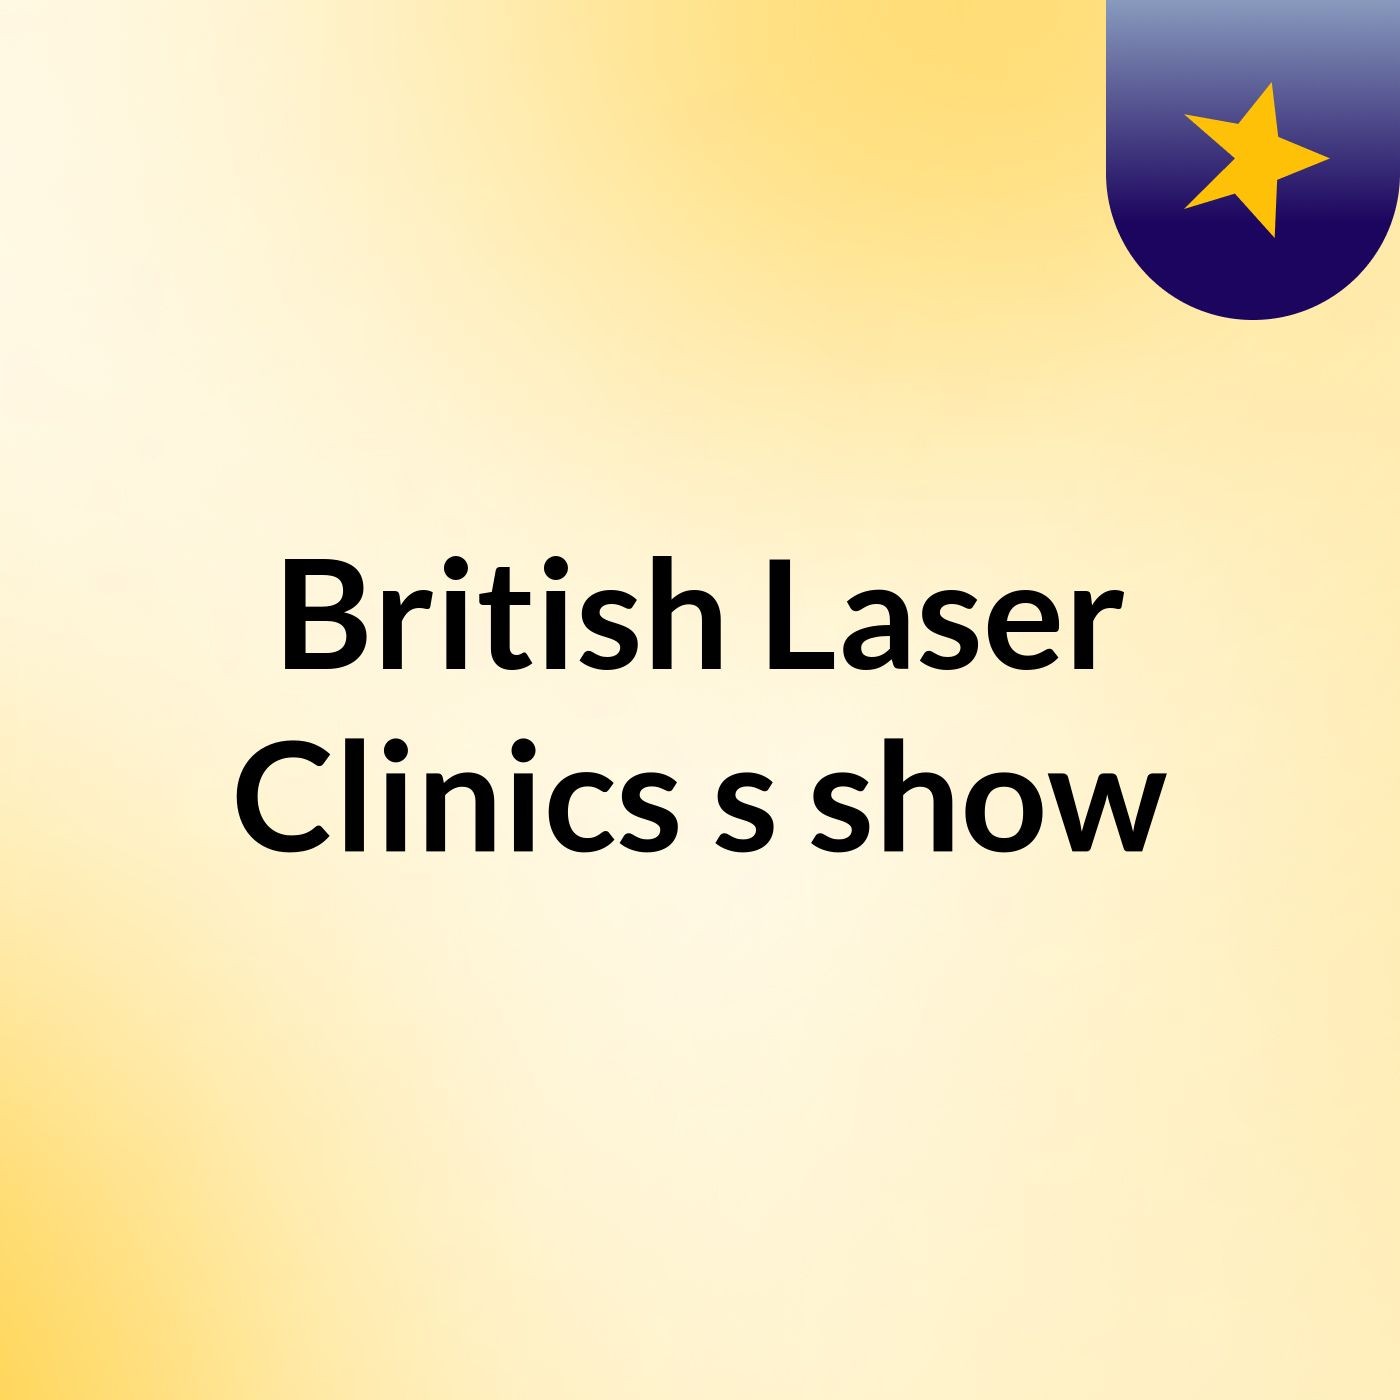 British Laser Clinics's show